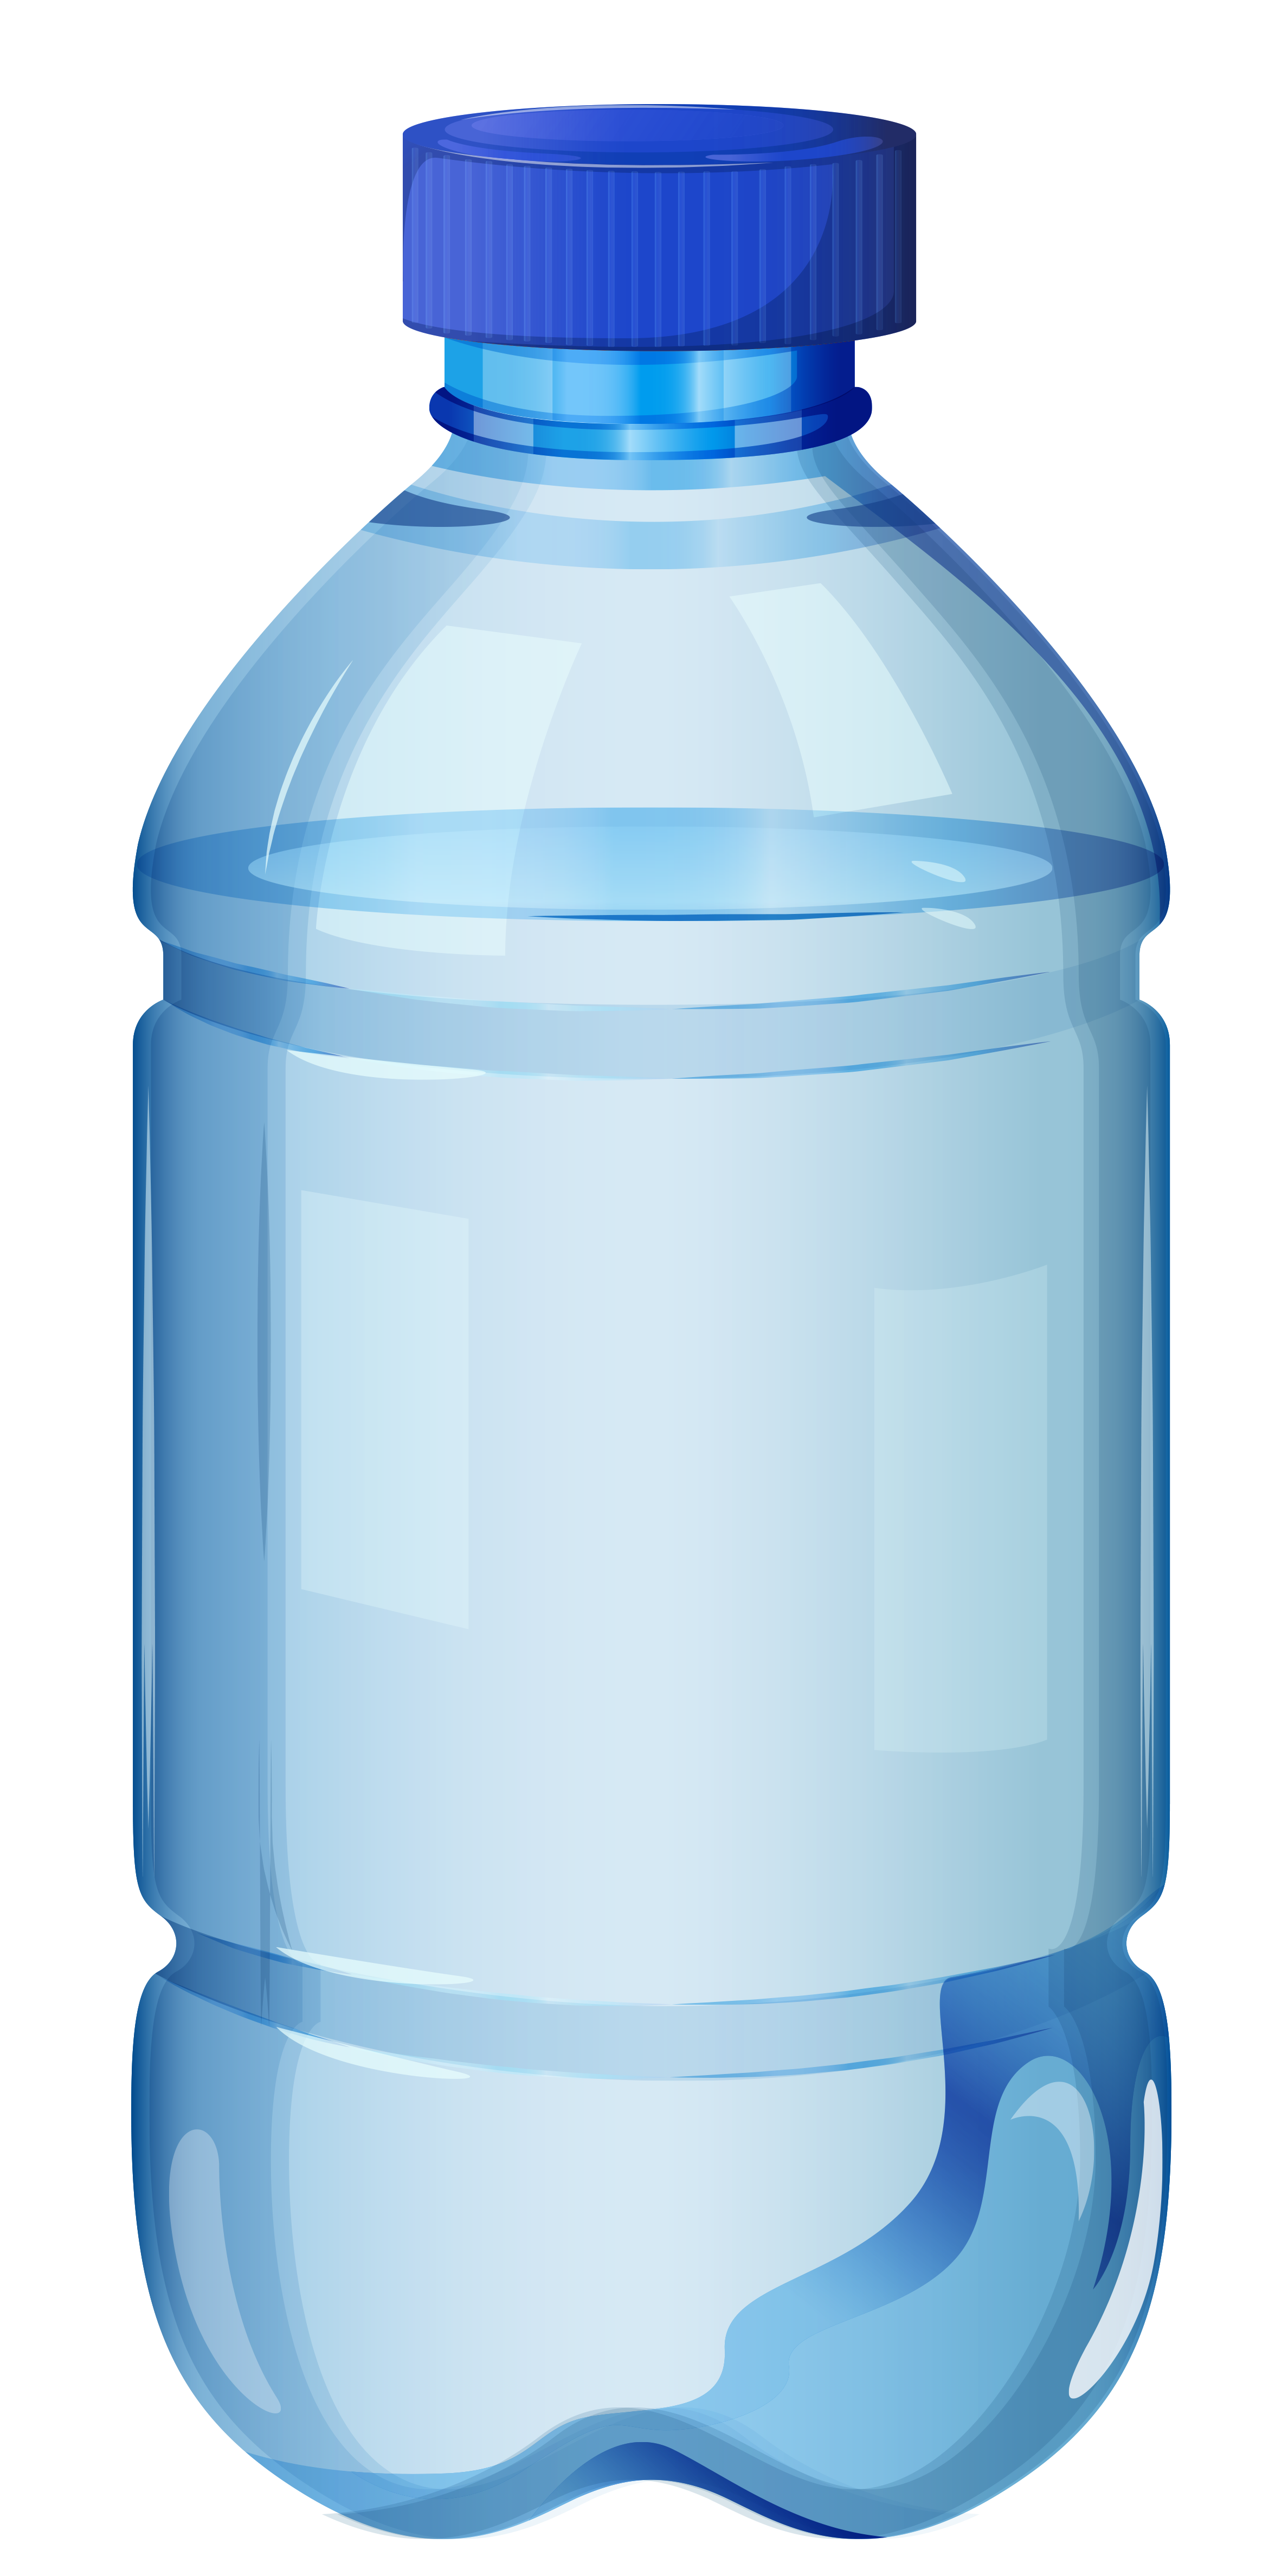 Water bottle Clip art - Water bottle PNG image png download - 2376*4752